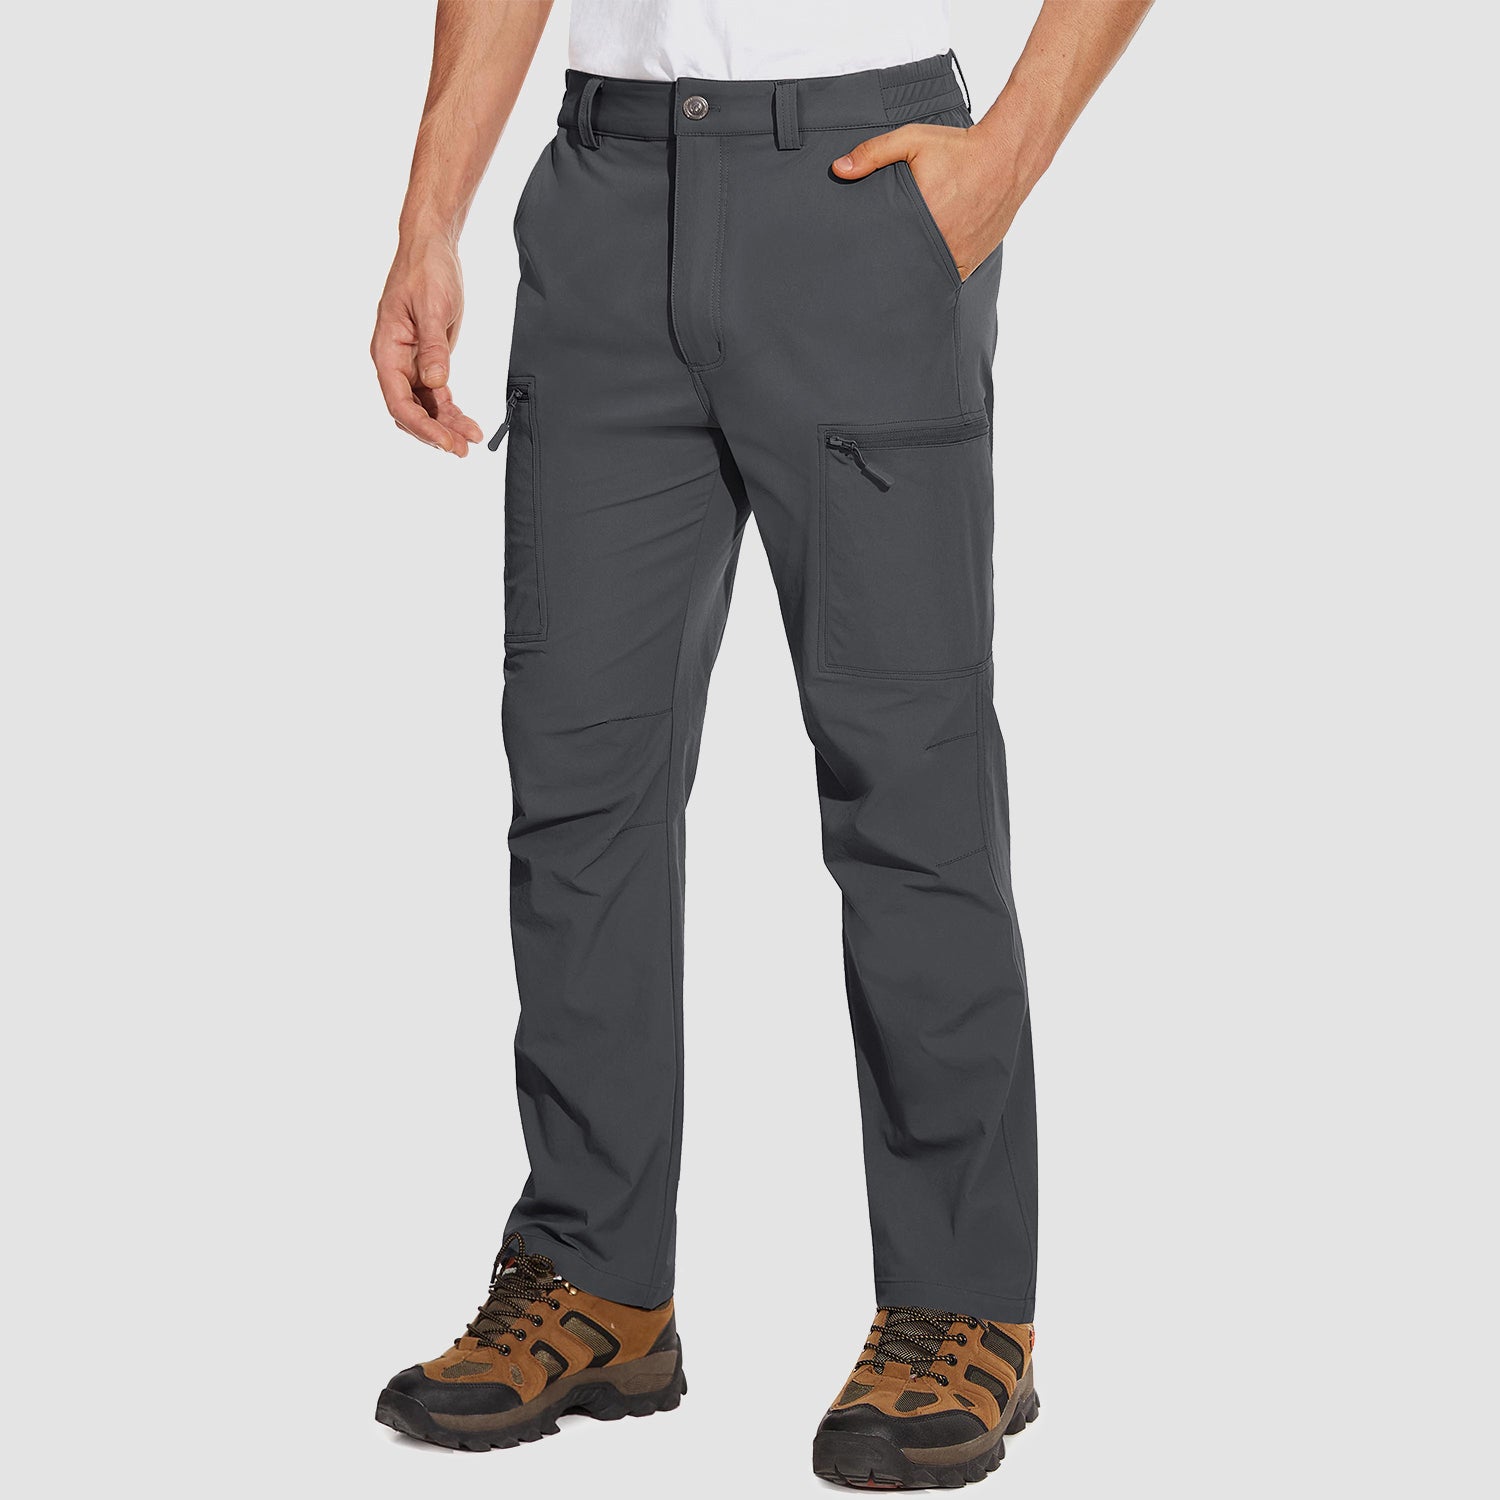 MAGCOMSEN Men's Pants Water Resistant Stretch Straight Leg Cargo Pant, Dark Grey / 34